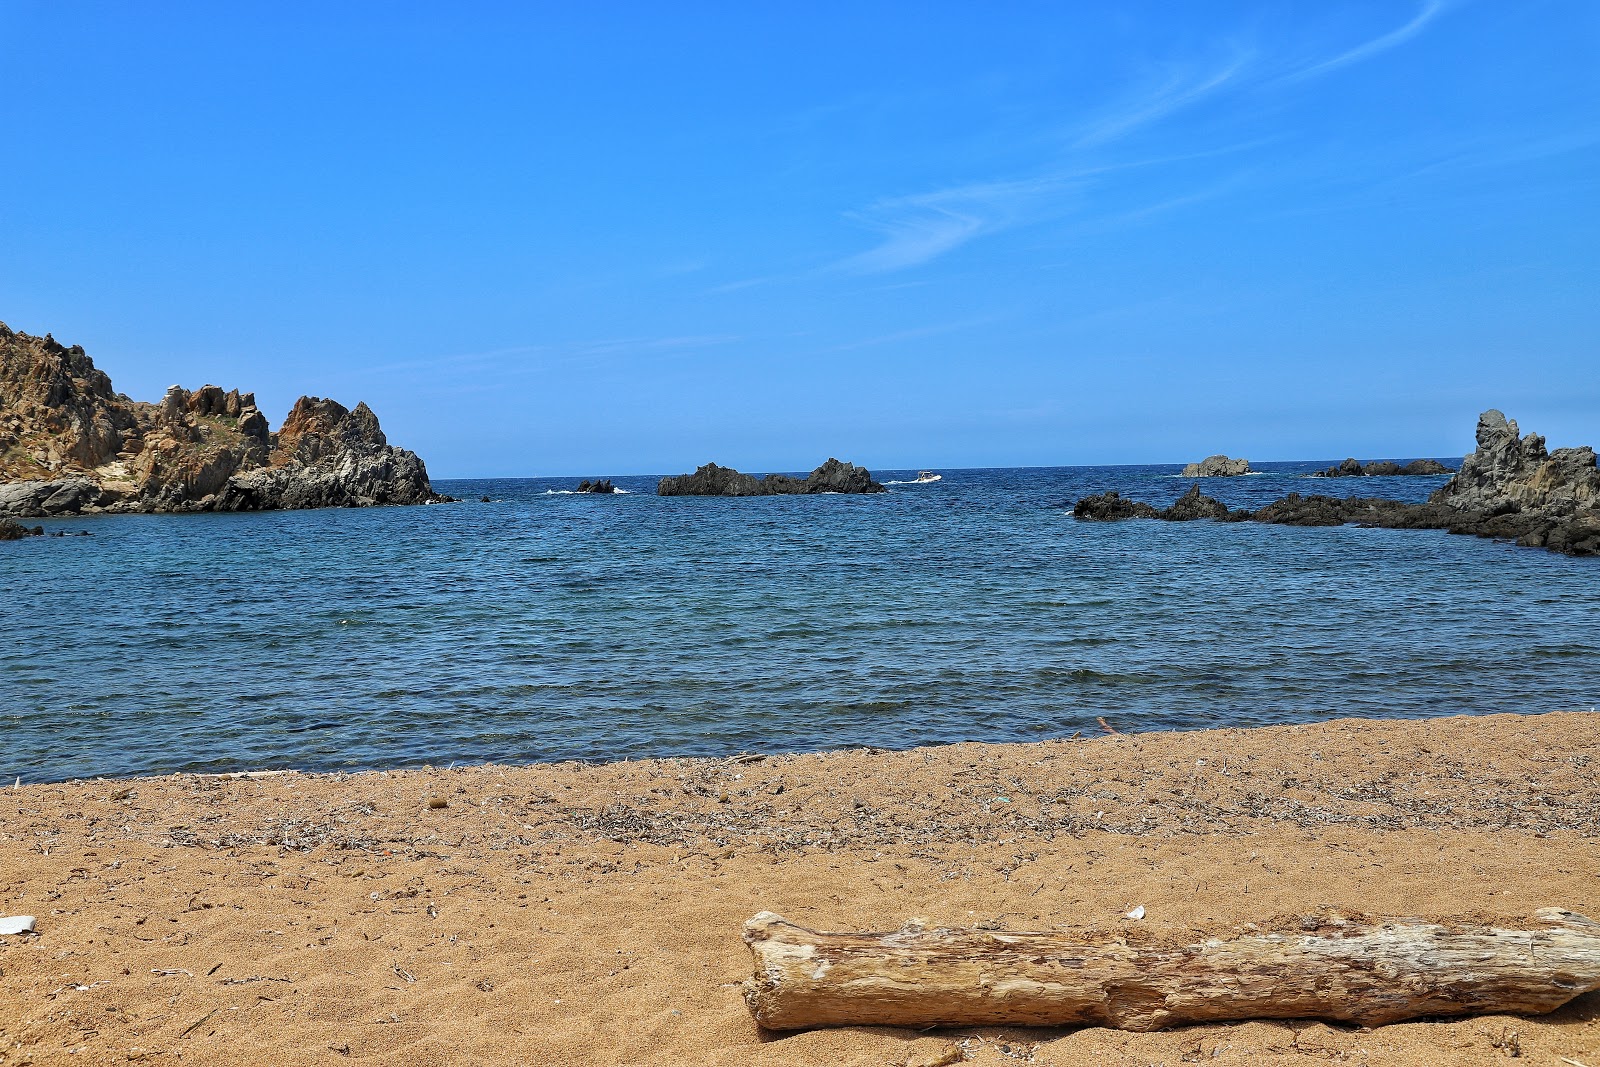 Foto de Spiaggia di Cala Faa localizado em área natural